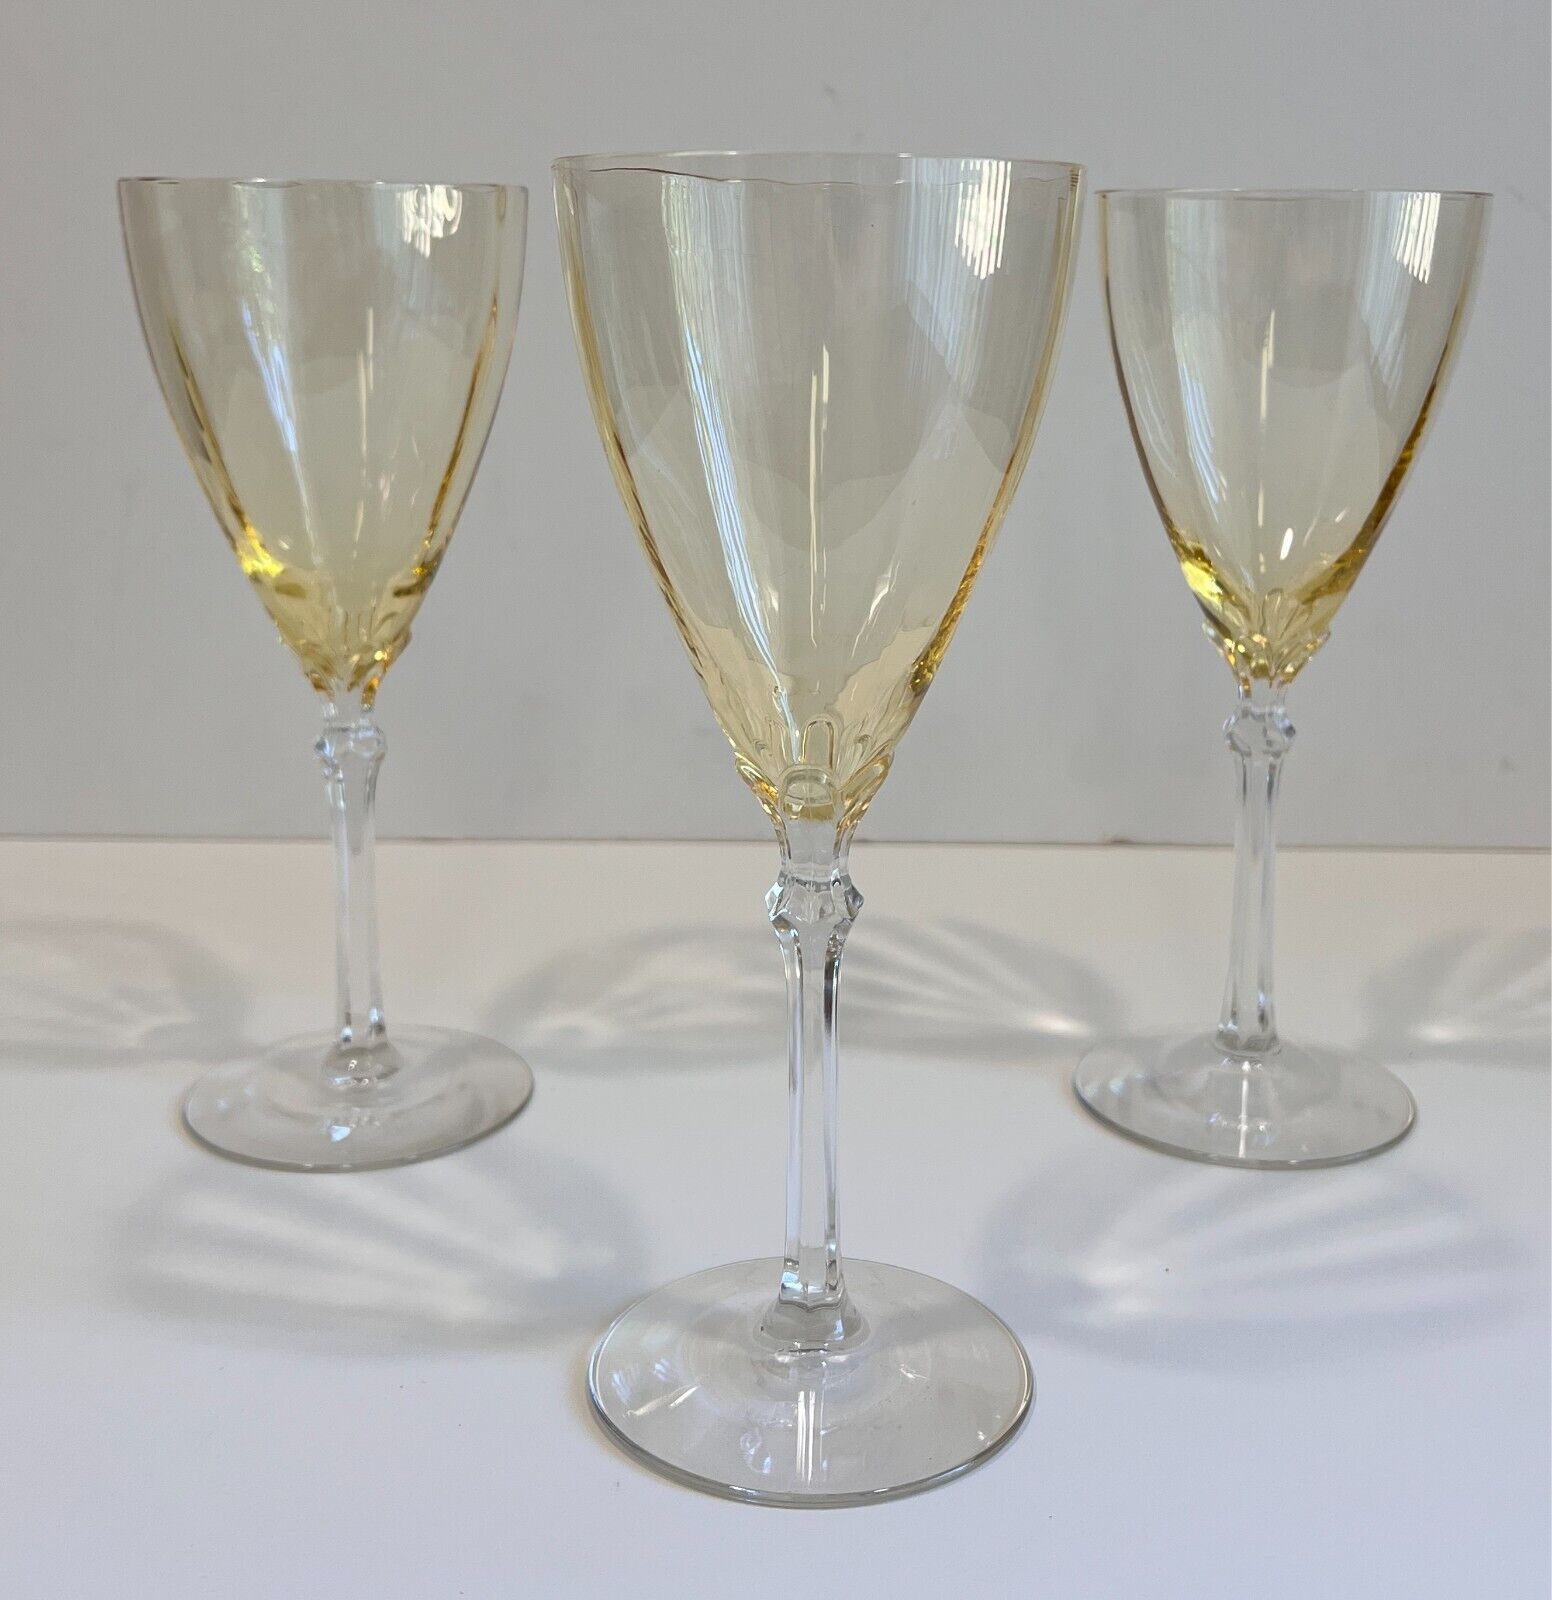 VINTAGE FOSTORIA 5098-5298 TOPAZ YELLOW GLASS SET OF 3 WATER GOBLETS GLASSES WOW